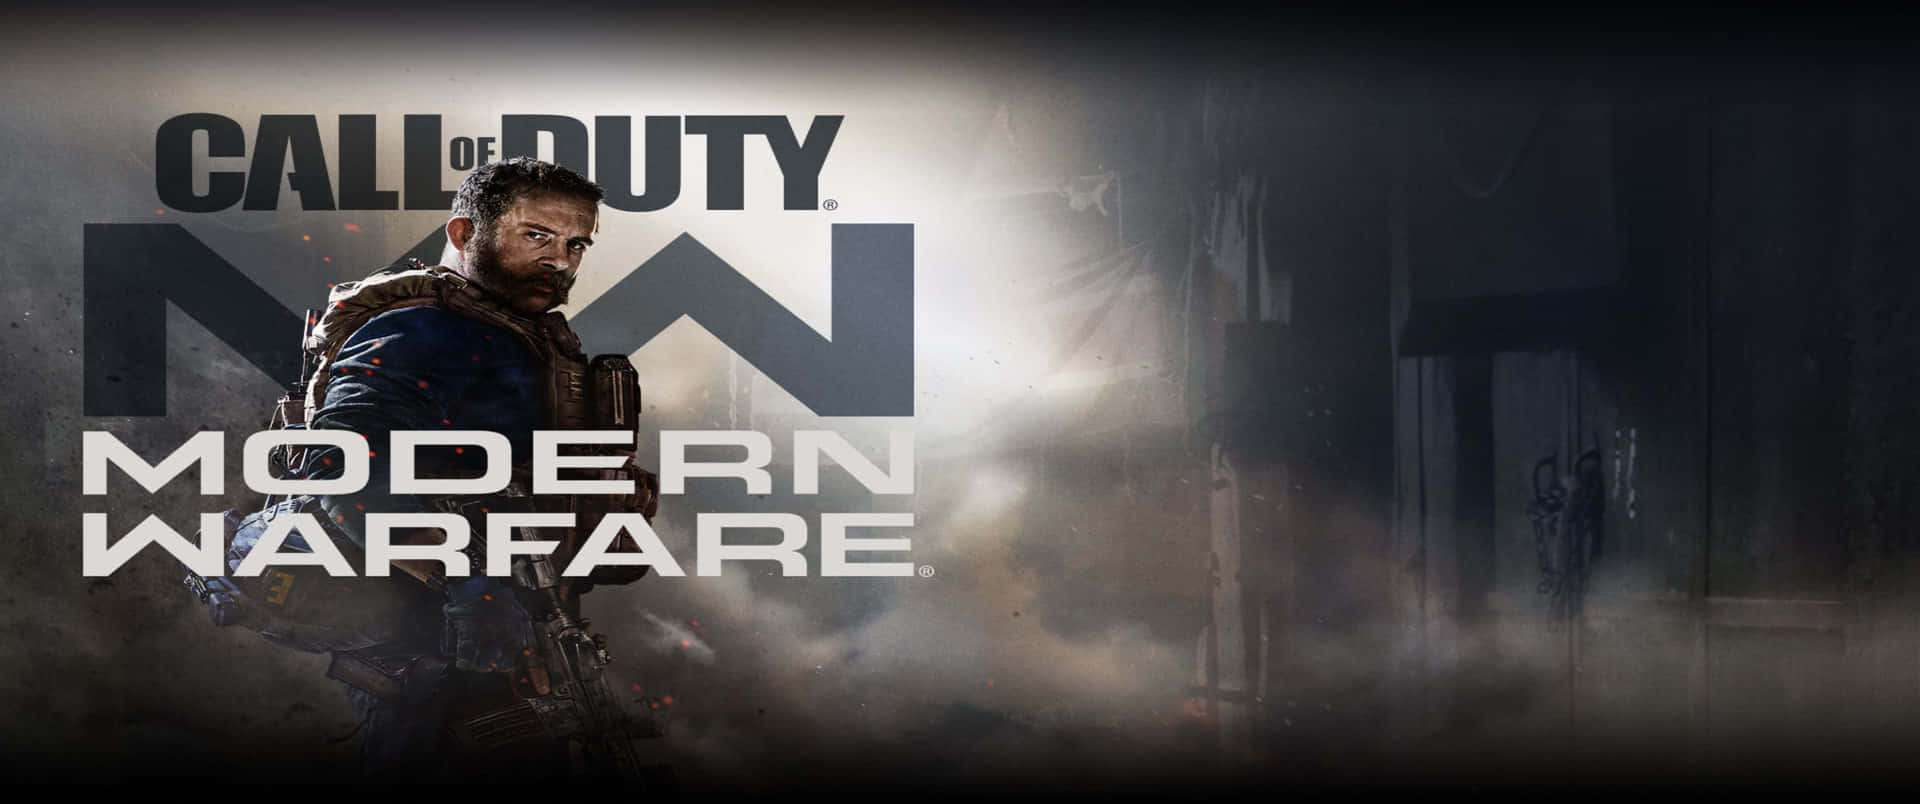 Johnprice Titolo Sfondo Call Of Duty Modern Warfare 3440x1440p